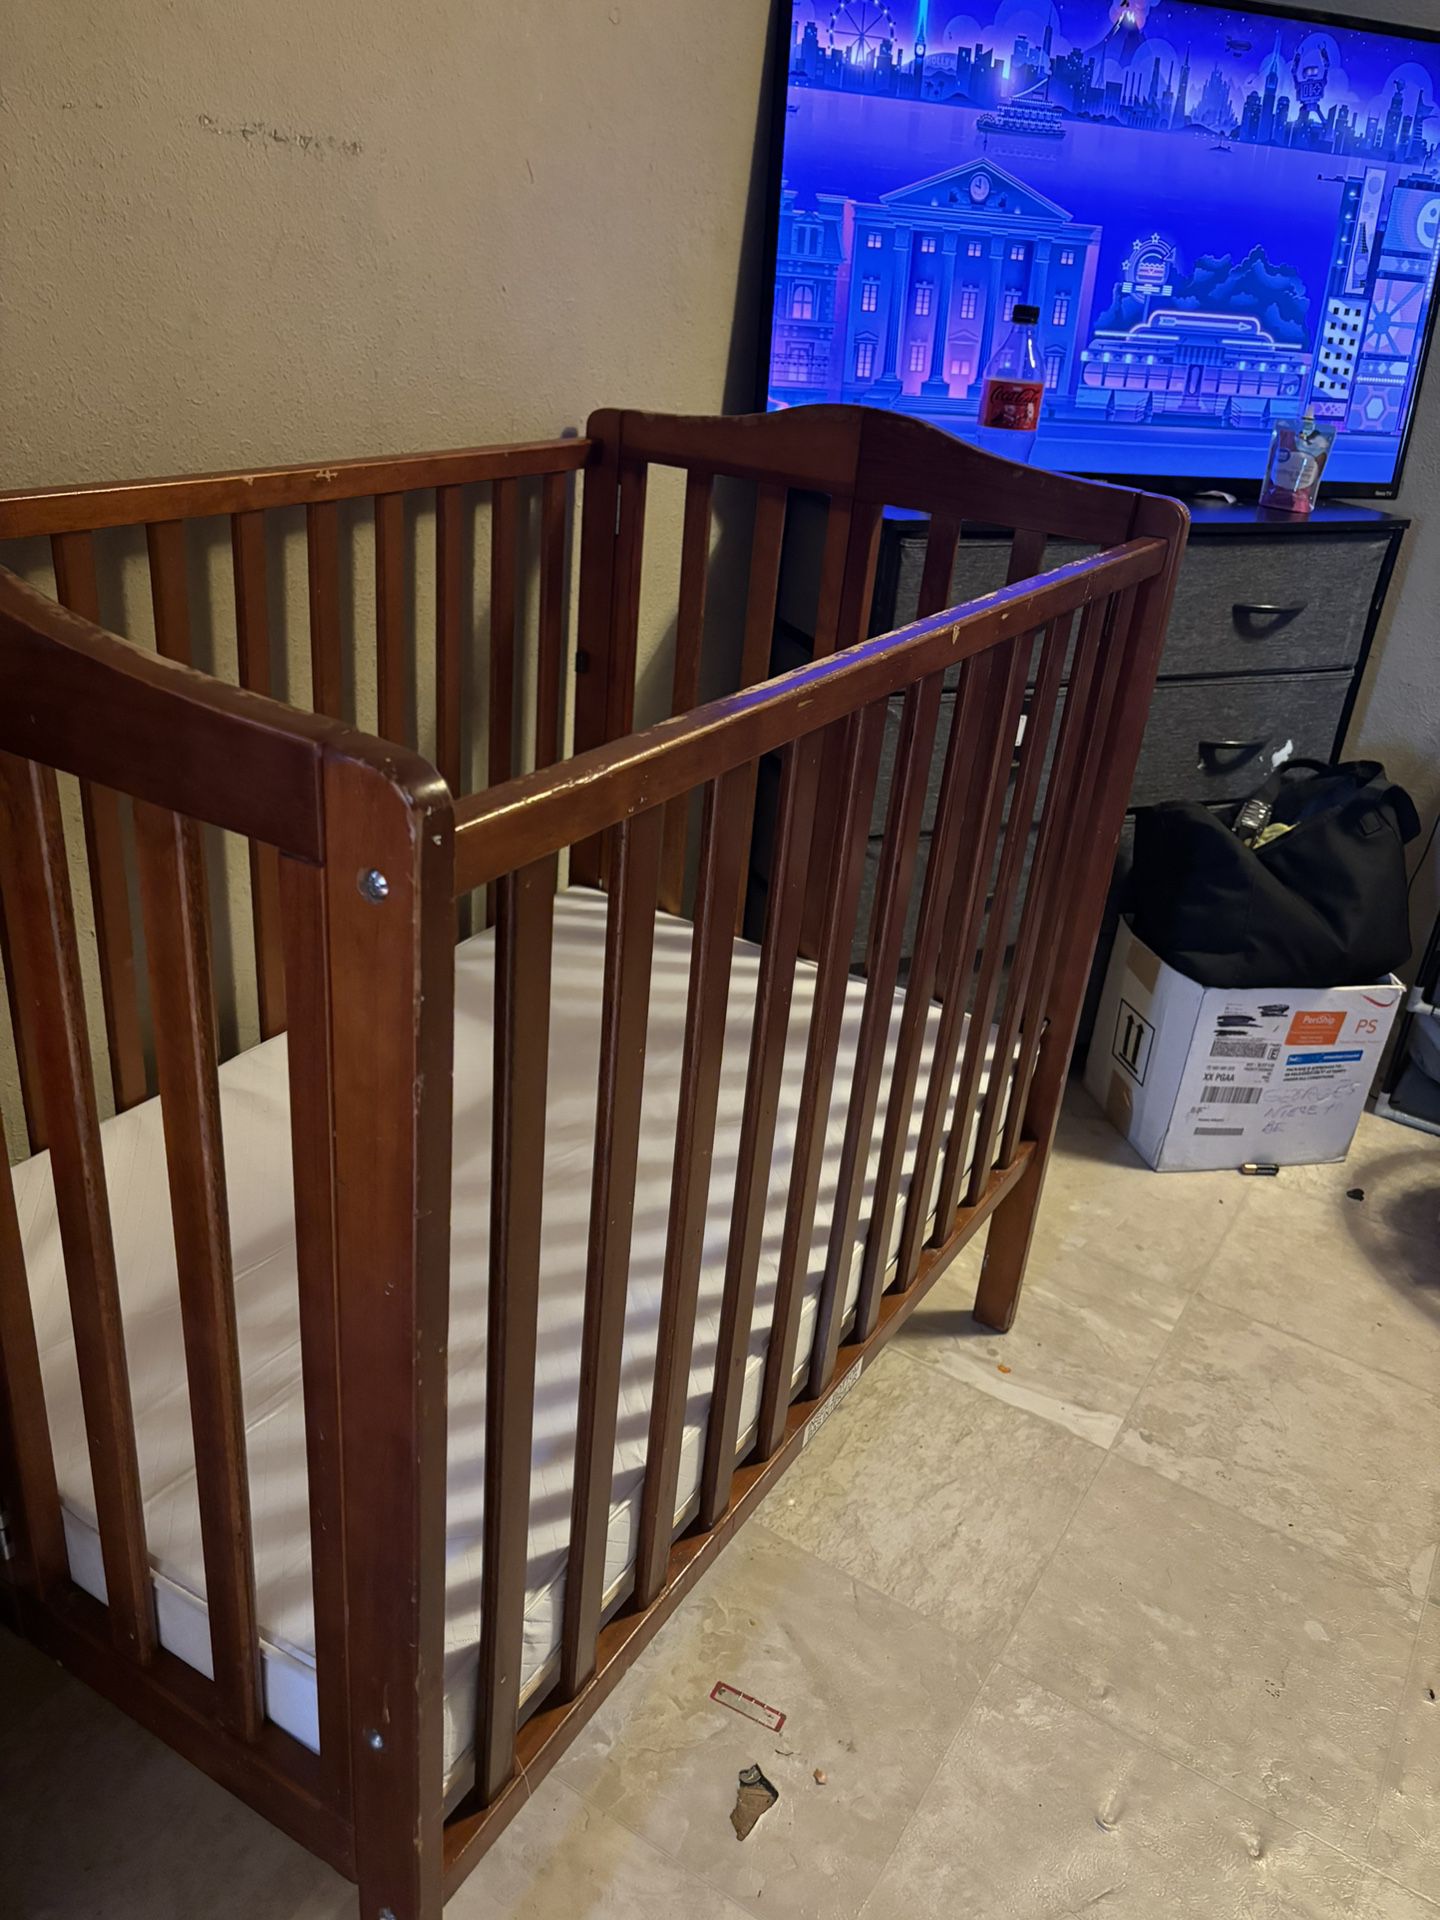 Mini Baby Crib 